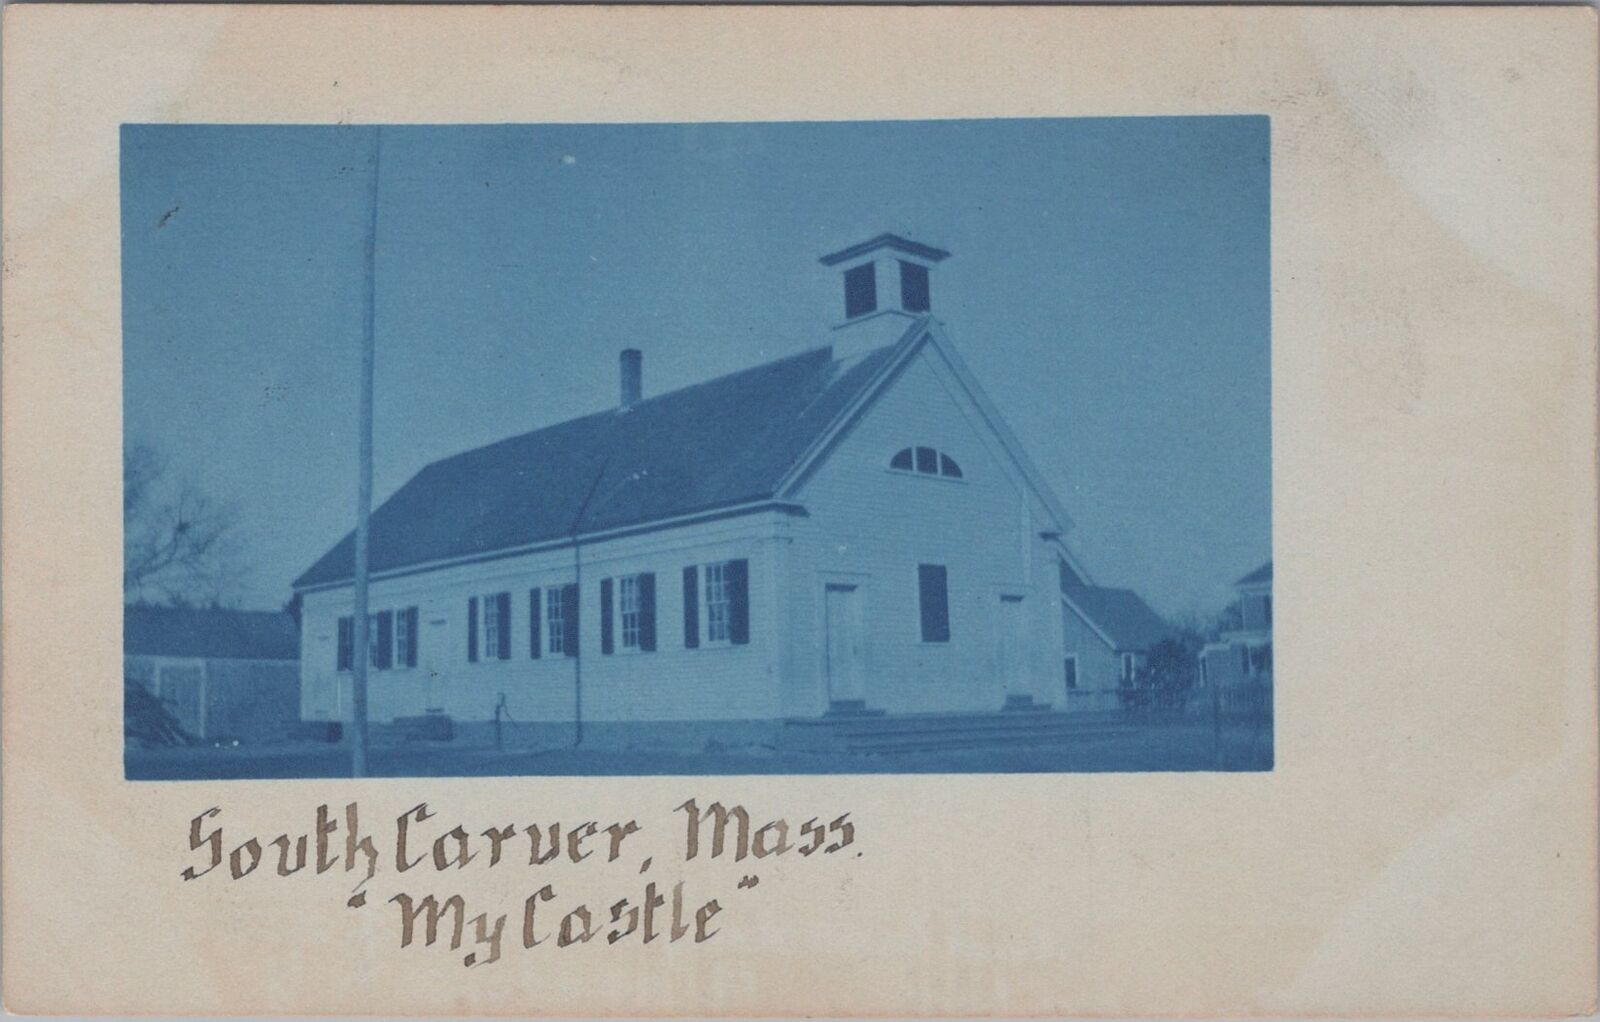 School South Carver Massachusetts My Castle 1907 Cyanotype RPPC Postcard